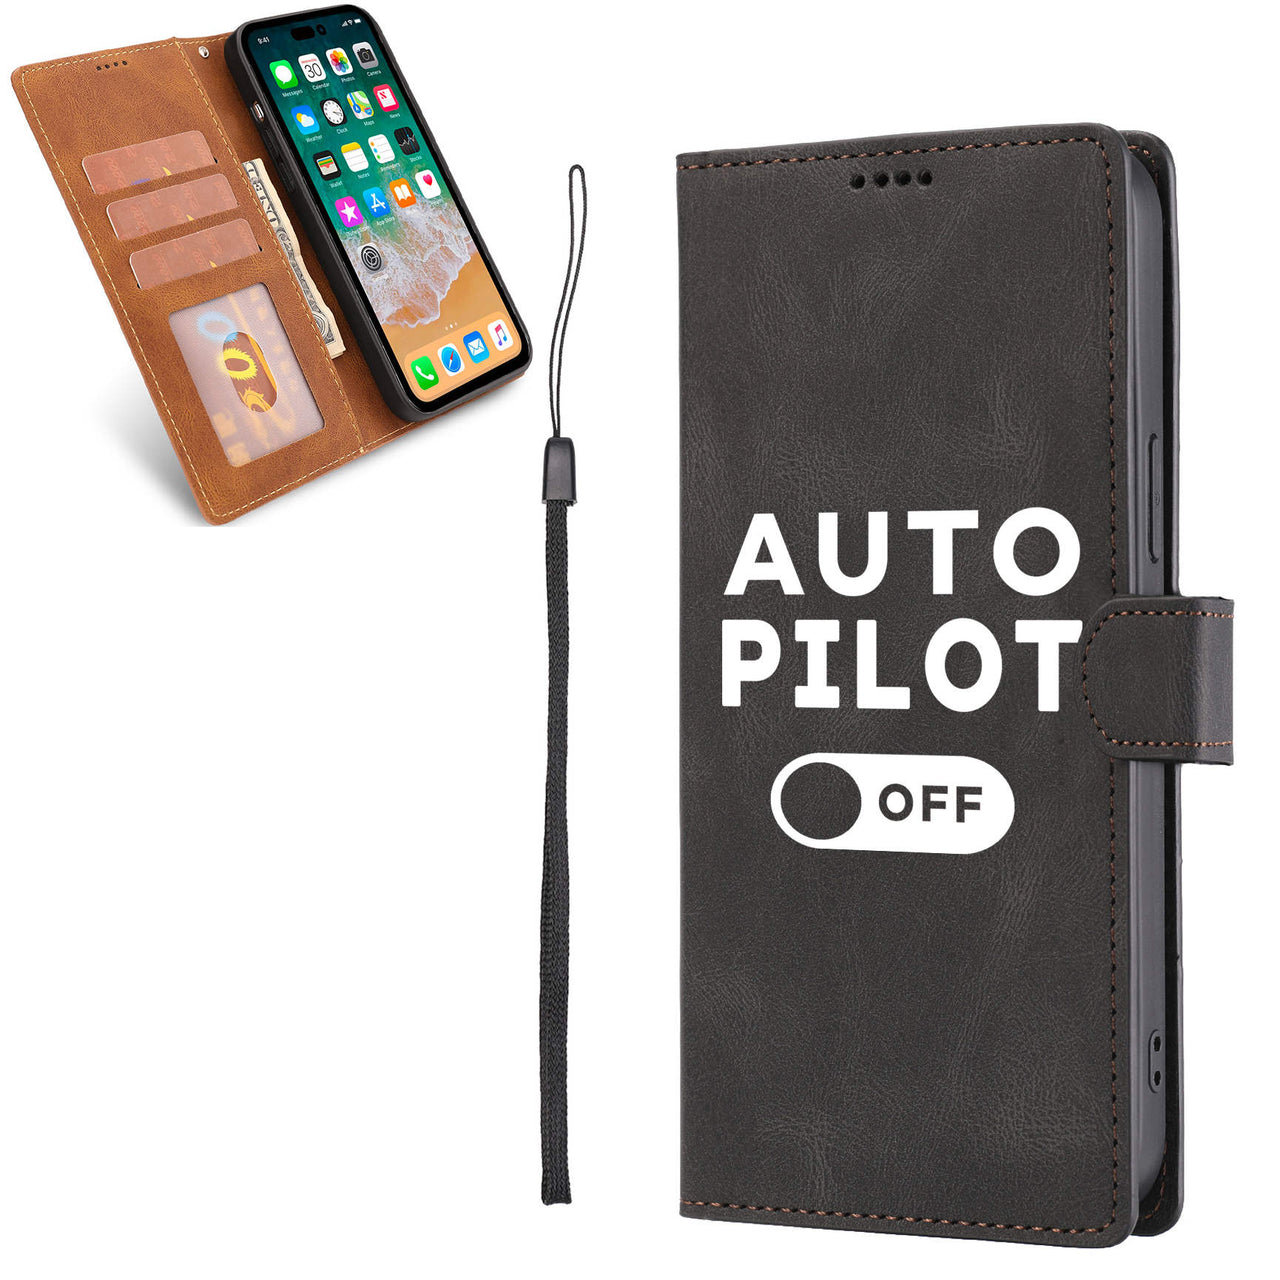 Auto Pilot Off Designed Leather iPhone Cases